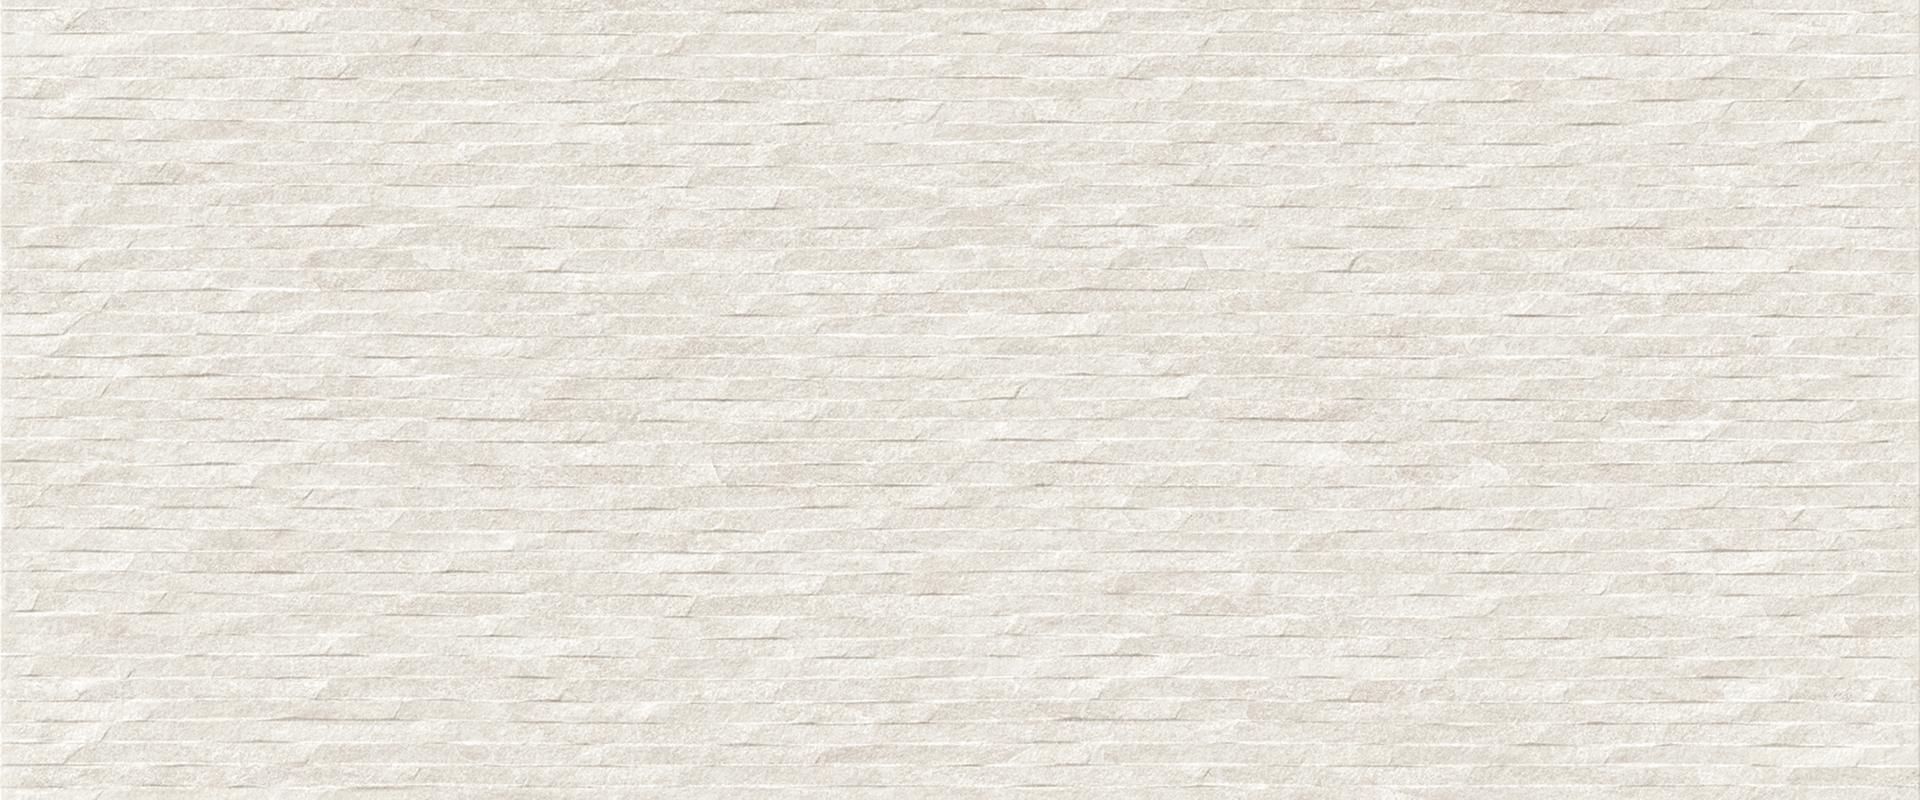 Oros Stone: Split Face White Field Tile (12"x24"x9.5-mm | matte)